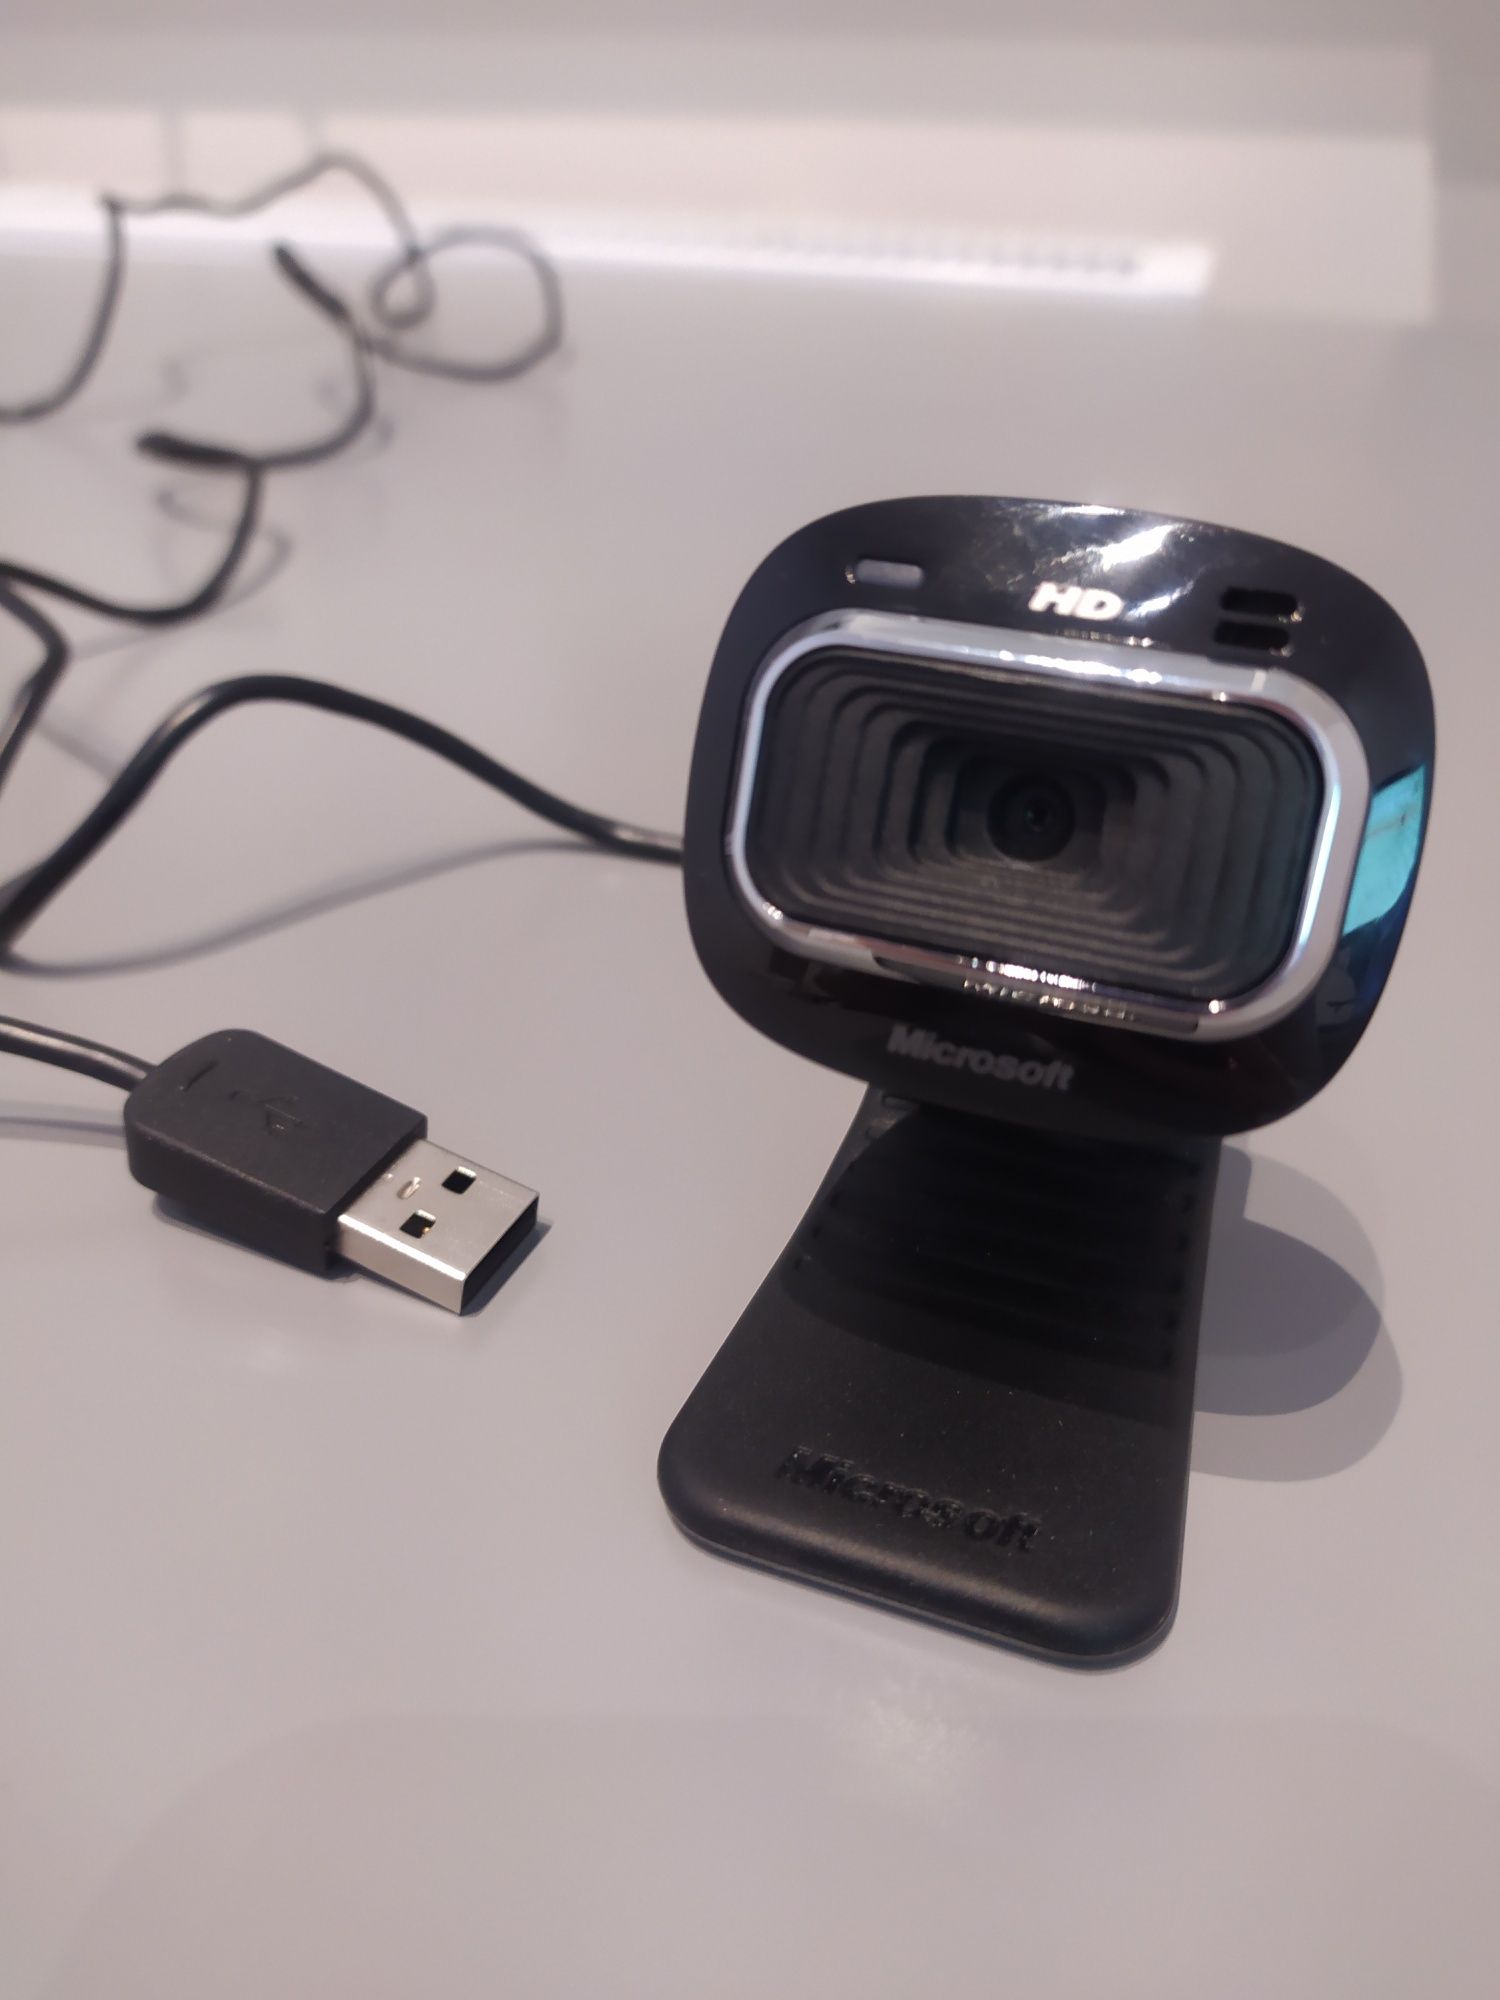 Kamera Microsoft lifecam hd-3000 Skype